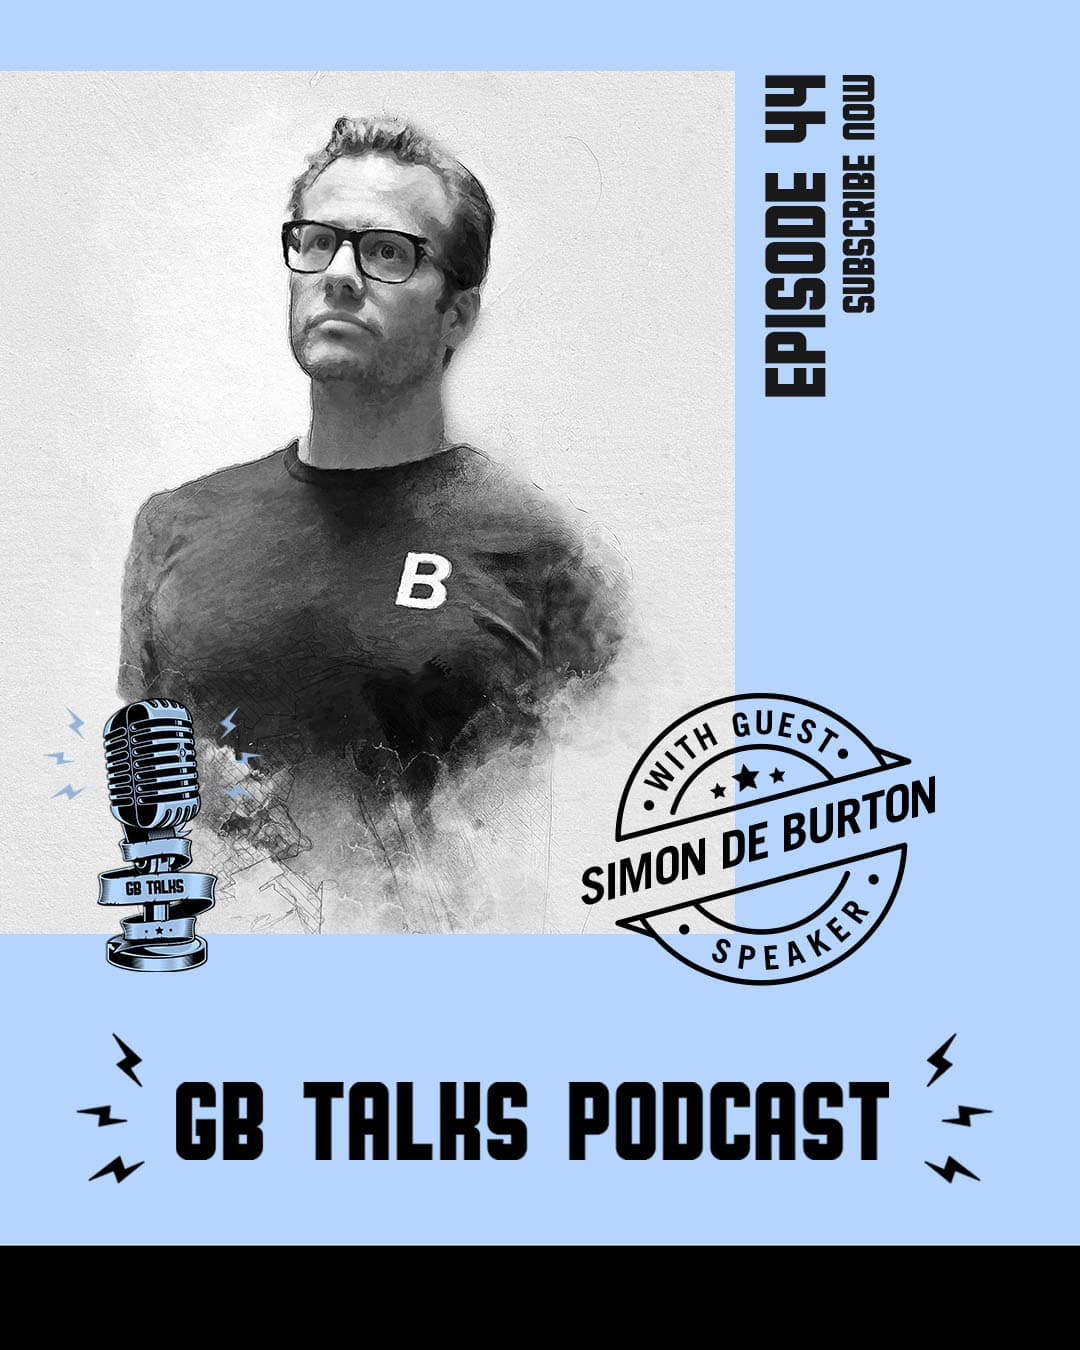 GB Talks Podcast Episode 44